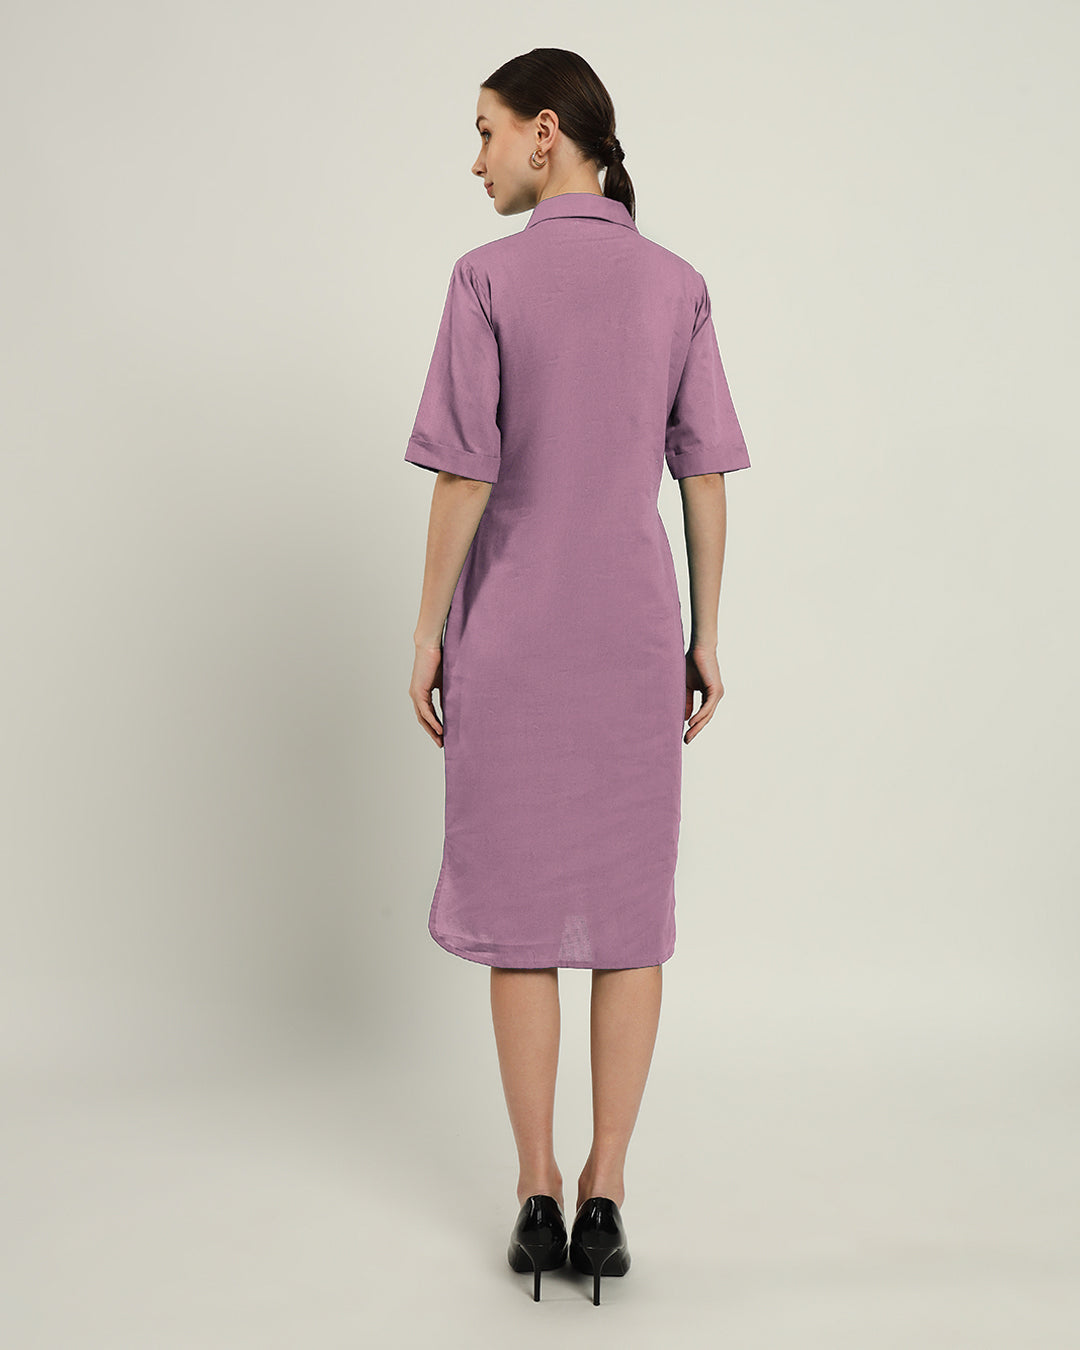 The Tampa Purple Swirl Cotton Dress